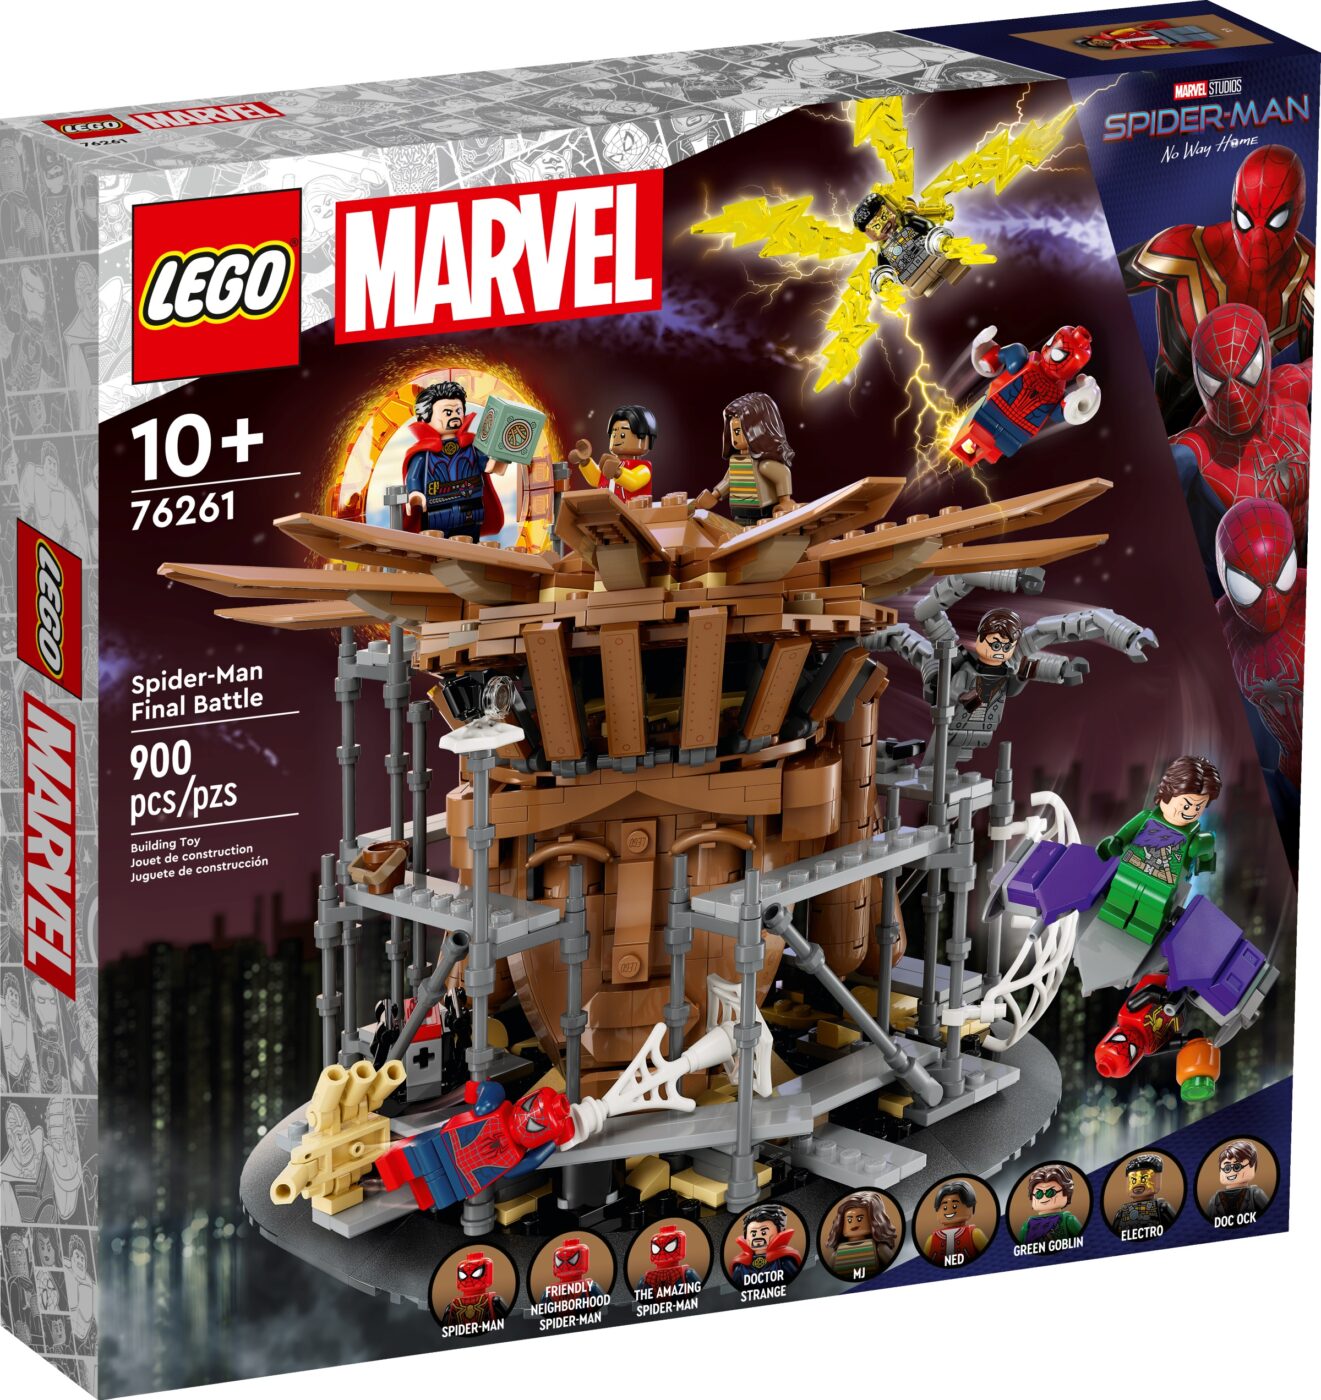 Review: LEGO 76261 Spider-Man Final Battle3